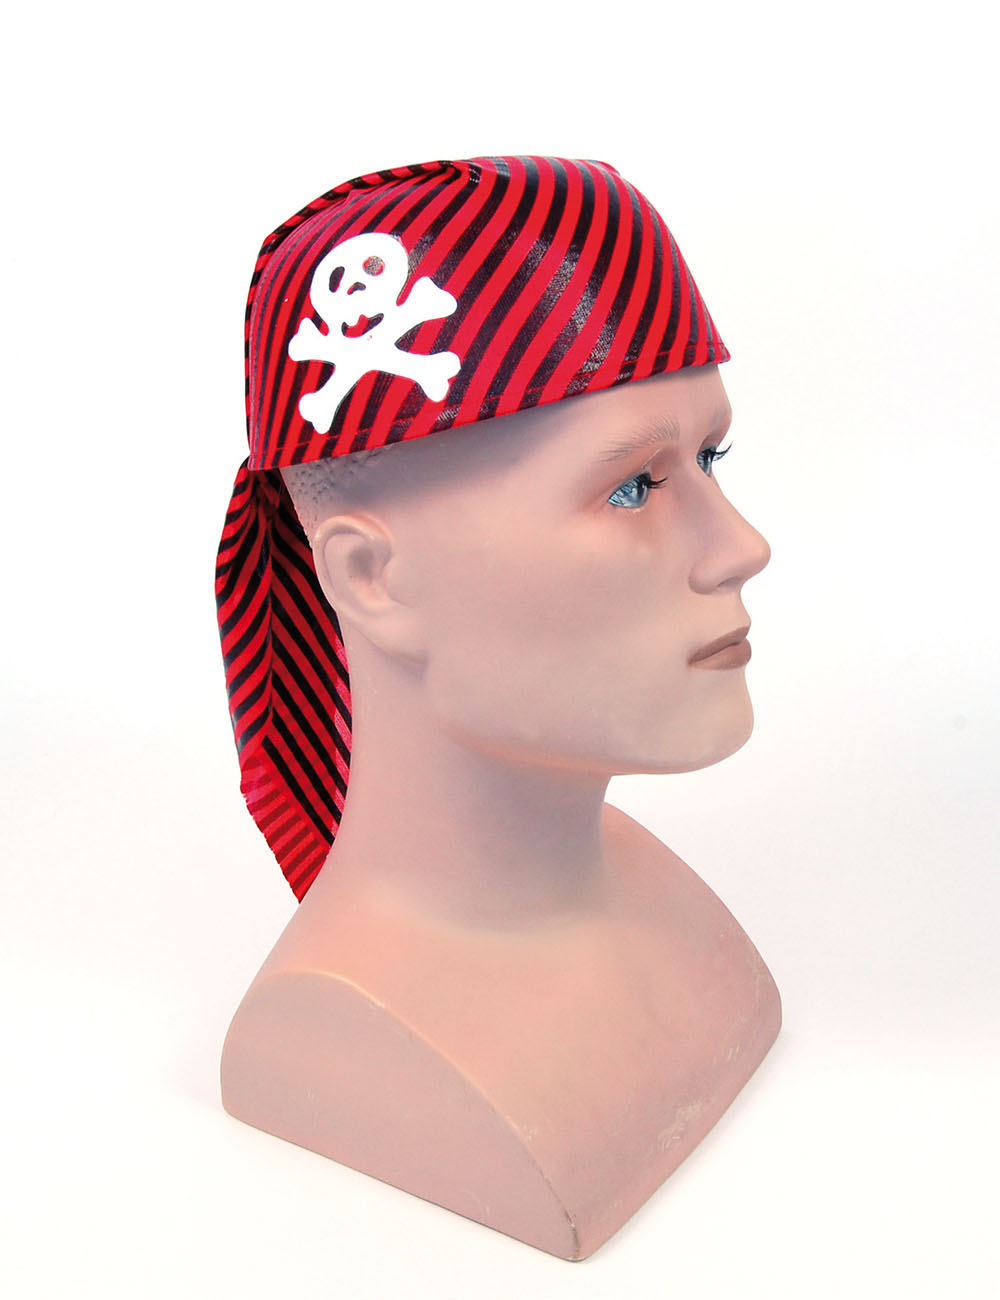 Pirate Skull Hat. Red/Black